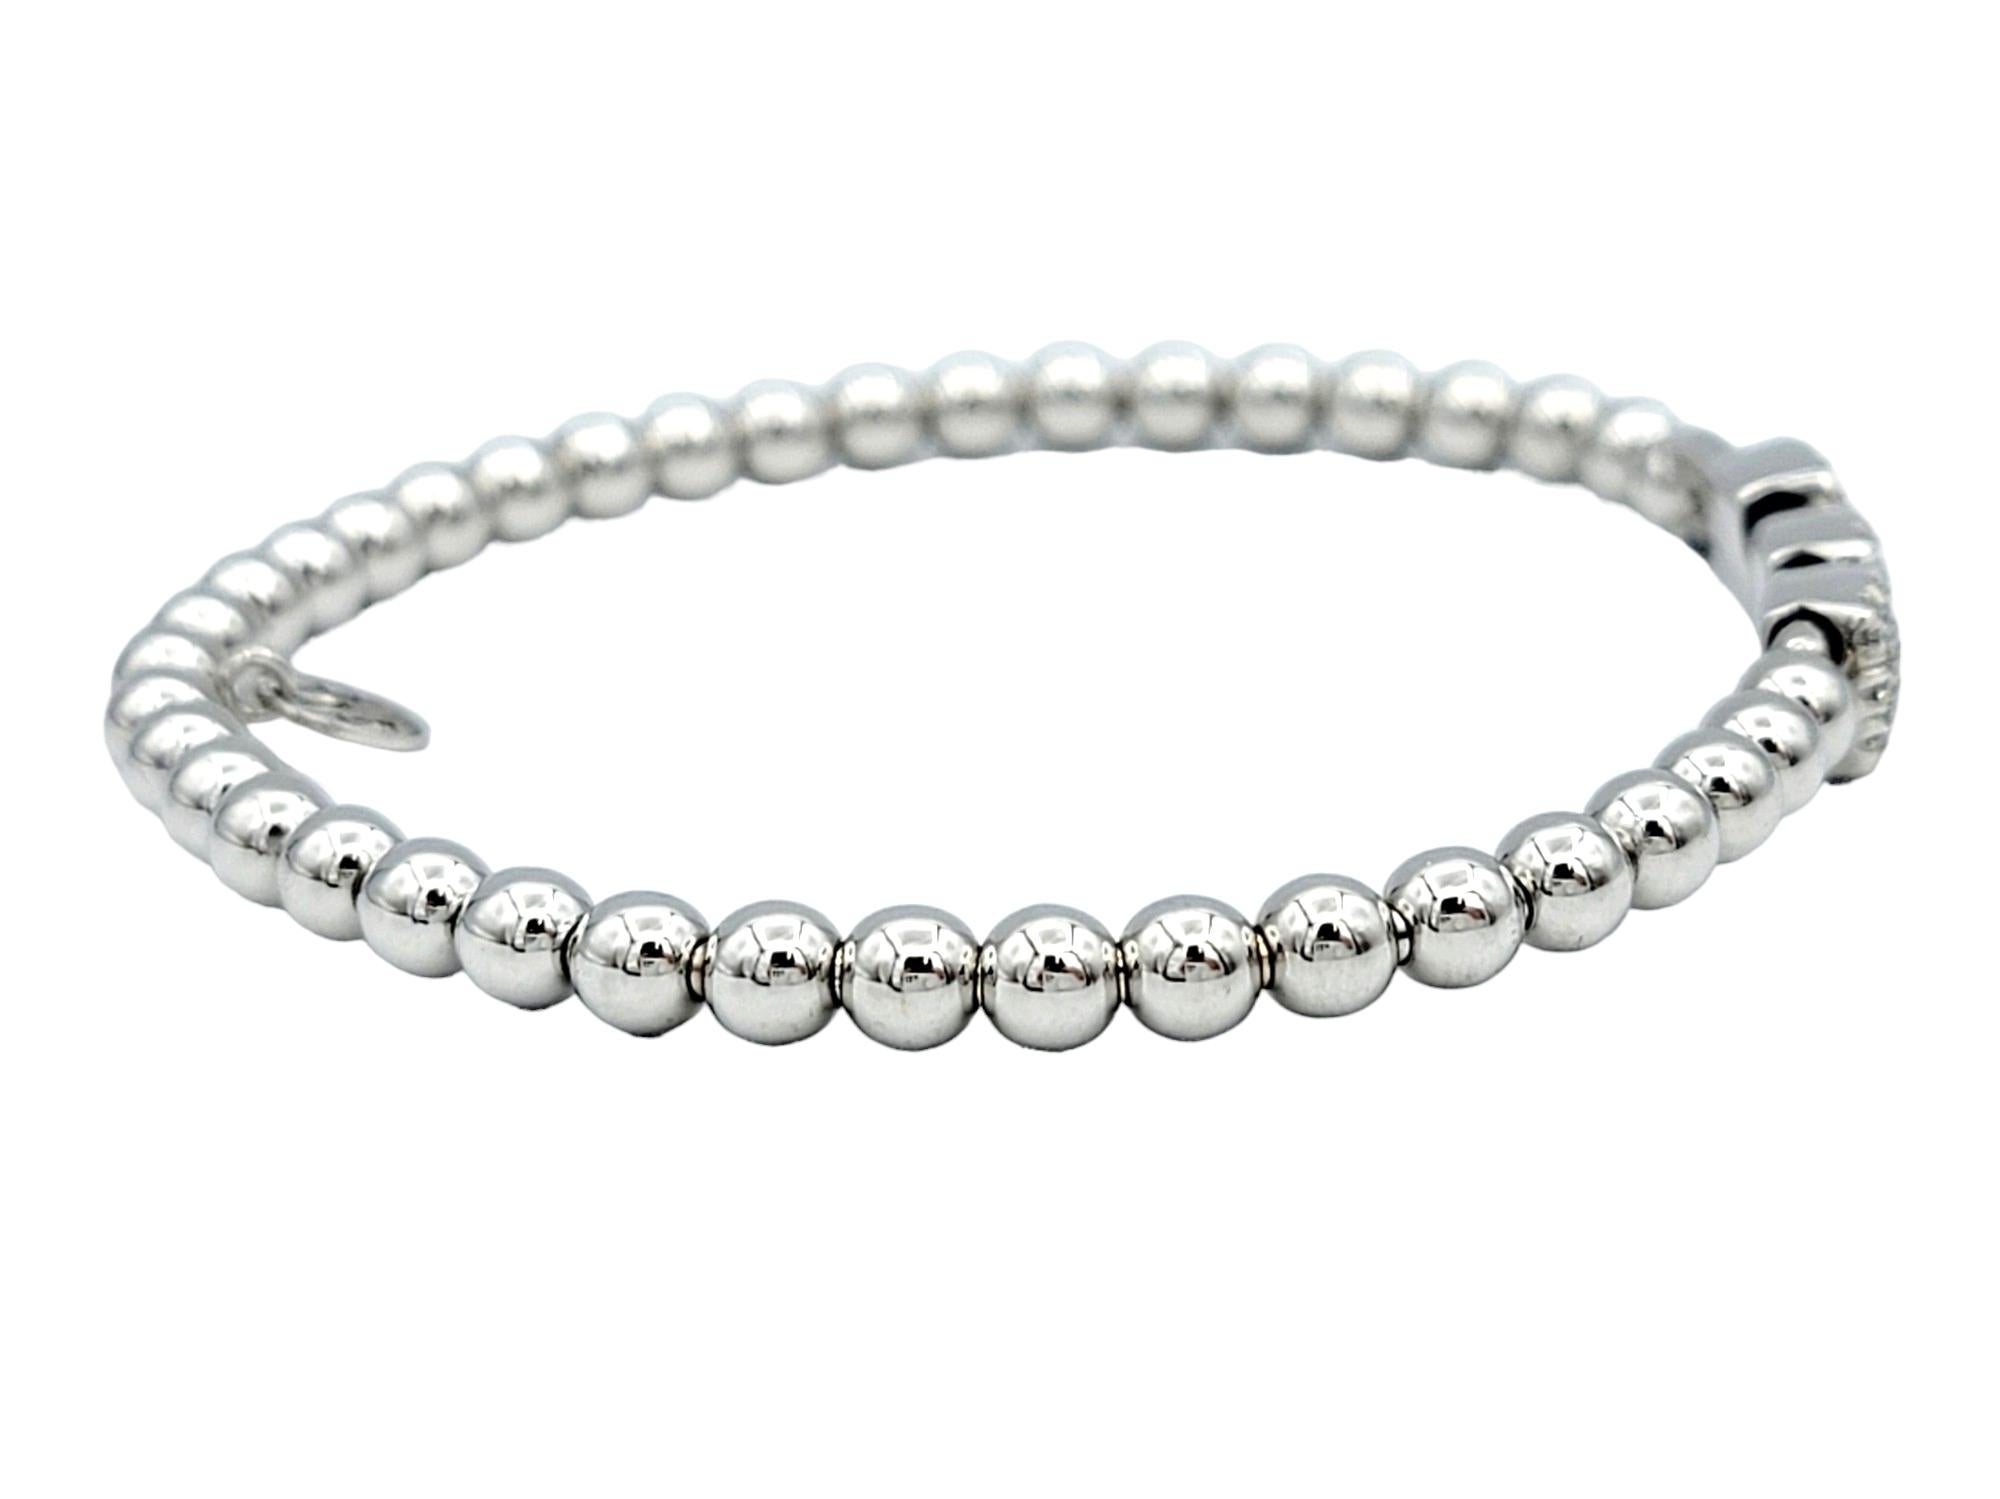 Contemporary Hulchi Belluni Tresore Collection 4mm Stretch Bracelet White Gold and Diamonds   For Sale